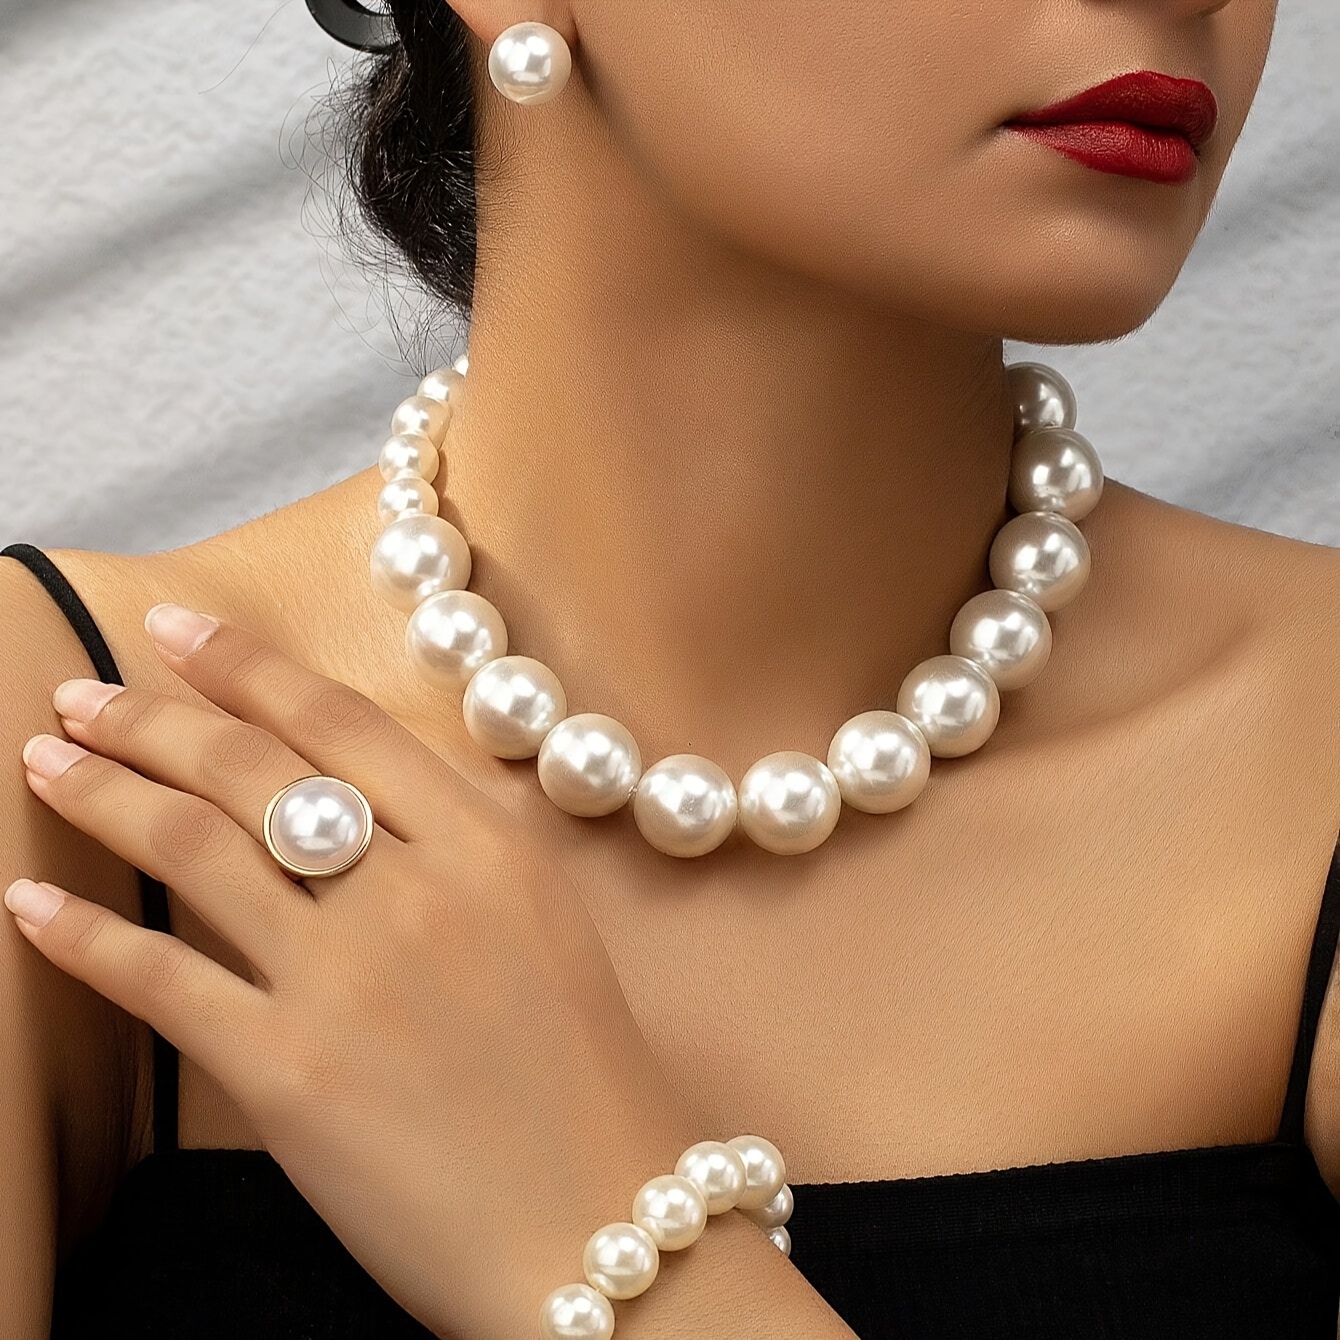 

Elegant 5-piece Faux Pearl Jewelry Set For Women, Includes Geometric Necklace, Stud Earrings, Bracelet & Rings, Vintage & Simple Style, Fashion Accessory Kit